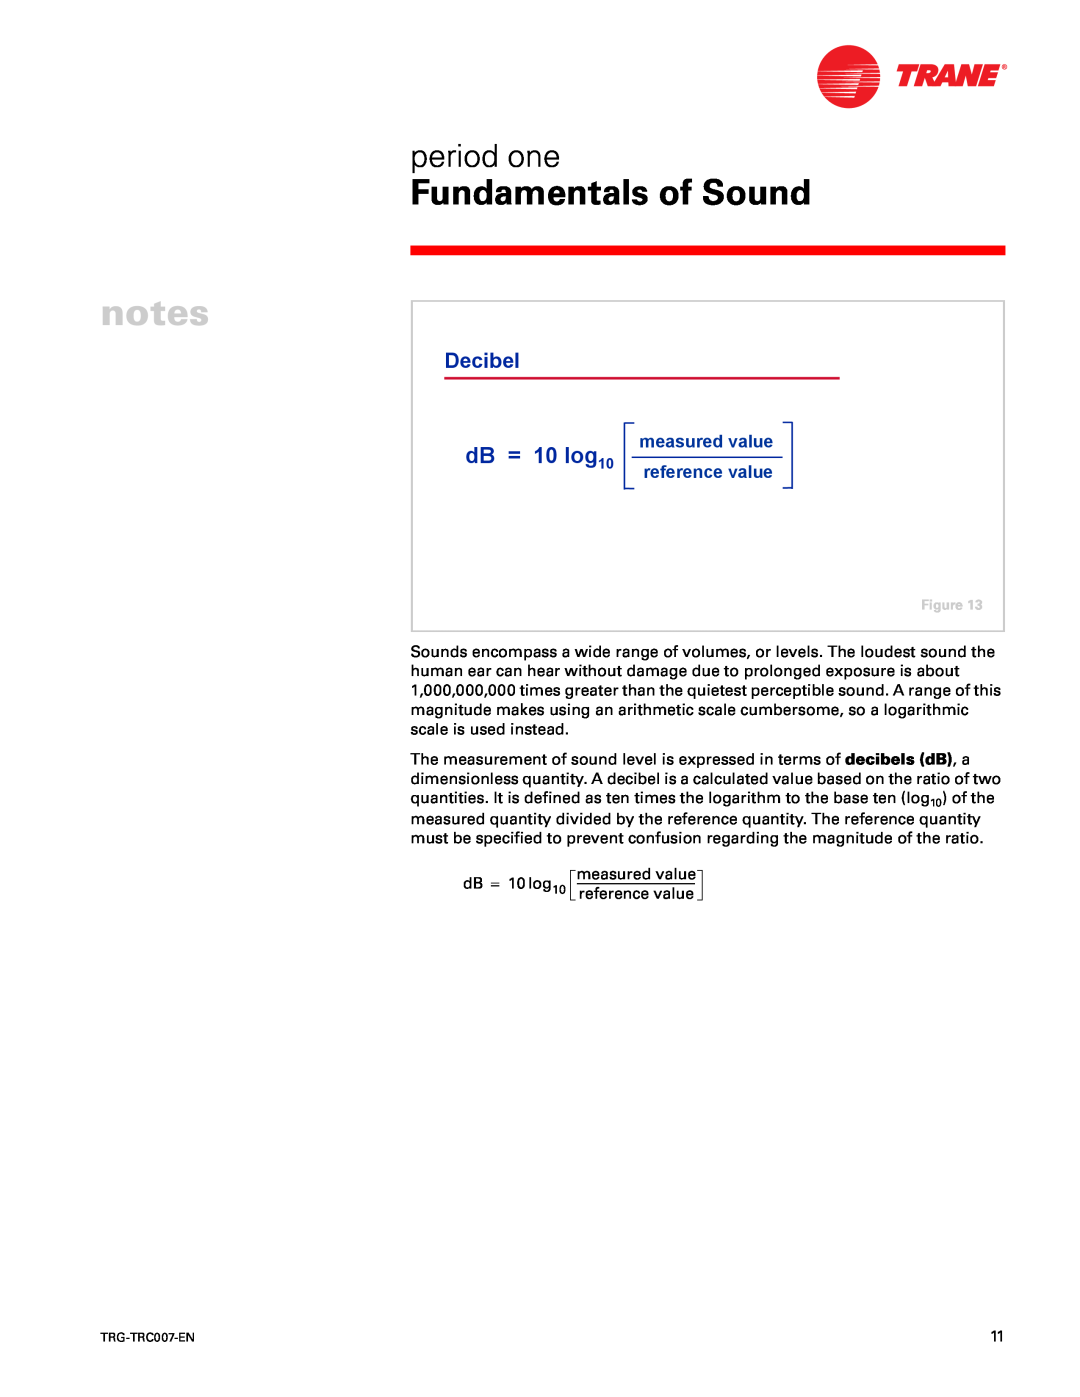 Trane TRG-TRC007-EN manual dB = 10 log10, Decibel, Fundamentals of Sound, period one, measured value, reference value 